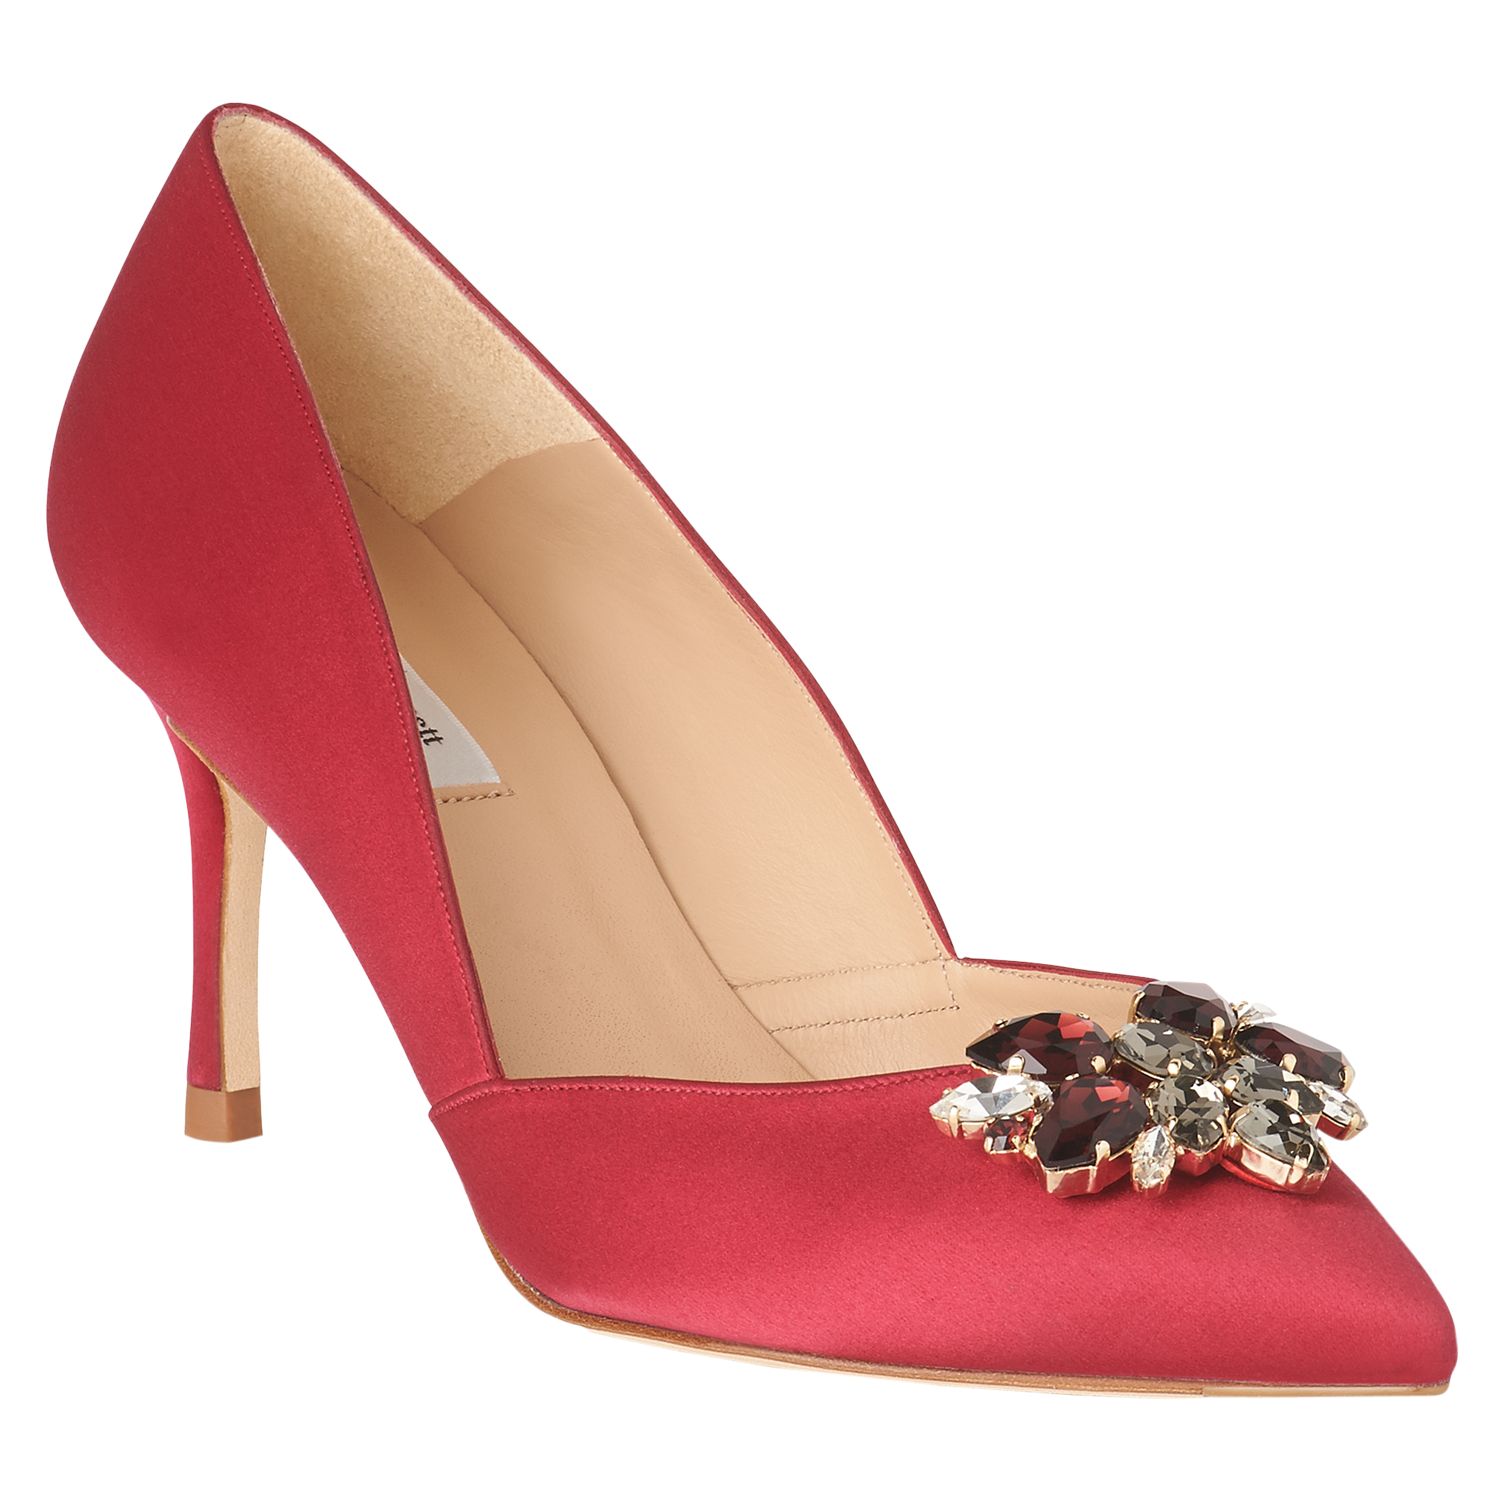 L.K.Bennett Cristina Embellished Court Shoes, Raspberry, 5.5